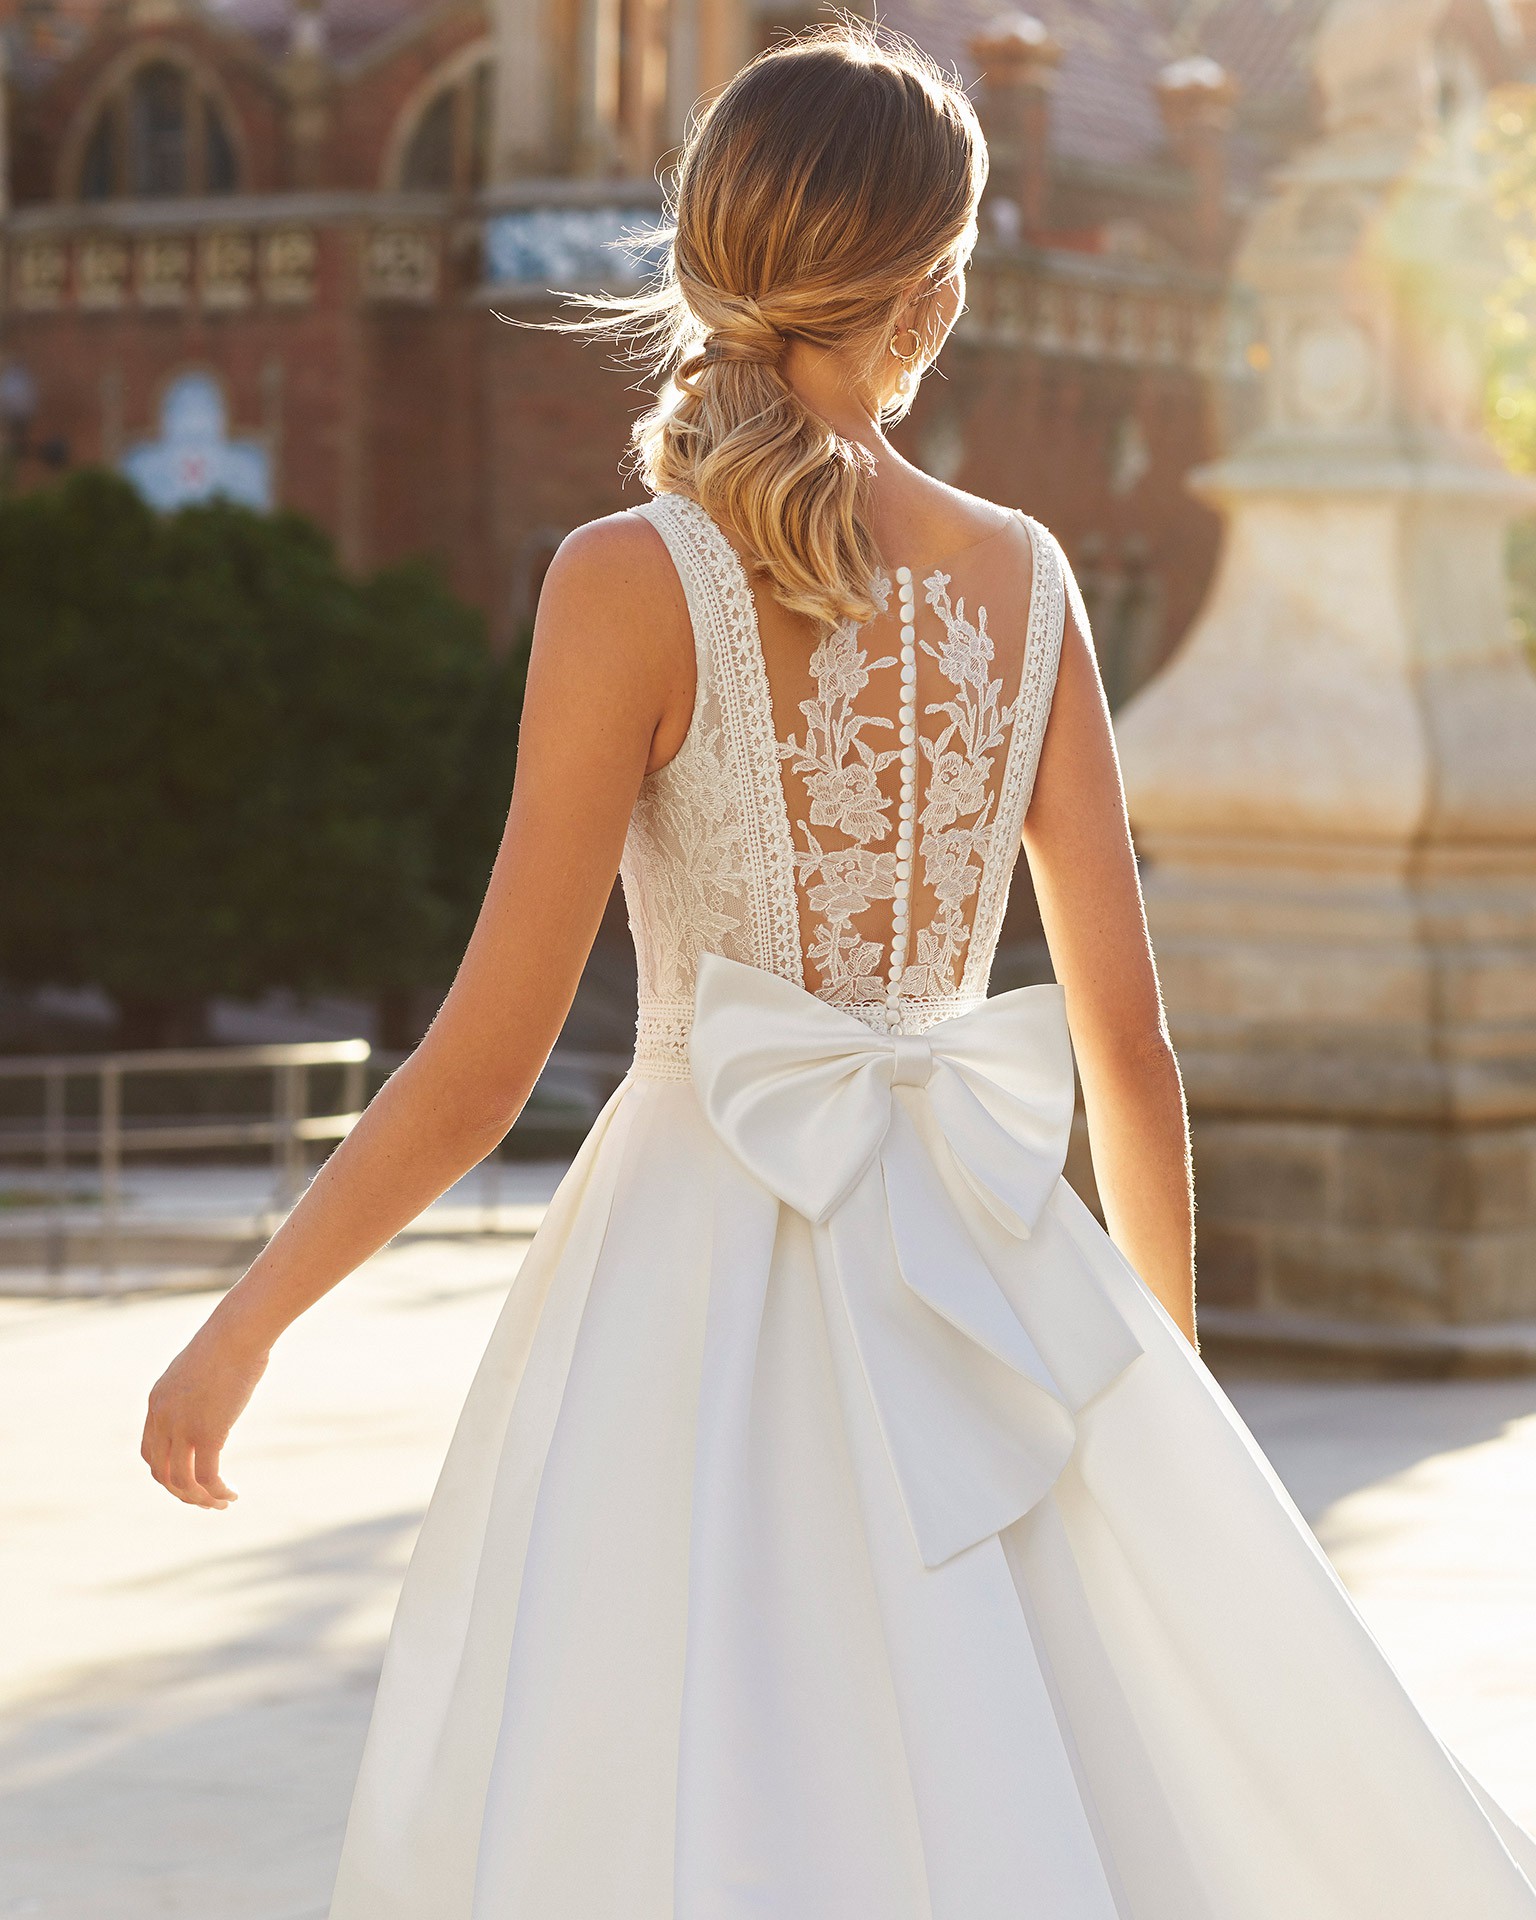 Luna Novias Sample Wedding Dress Save 50% - Stillwhite